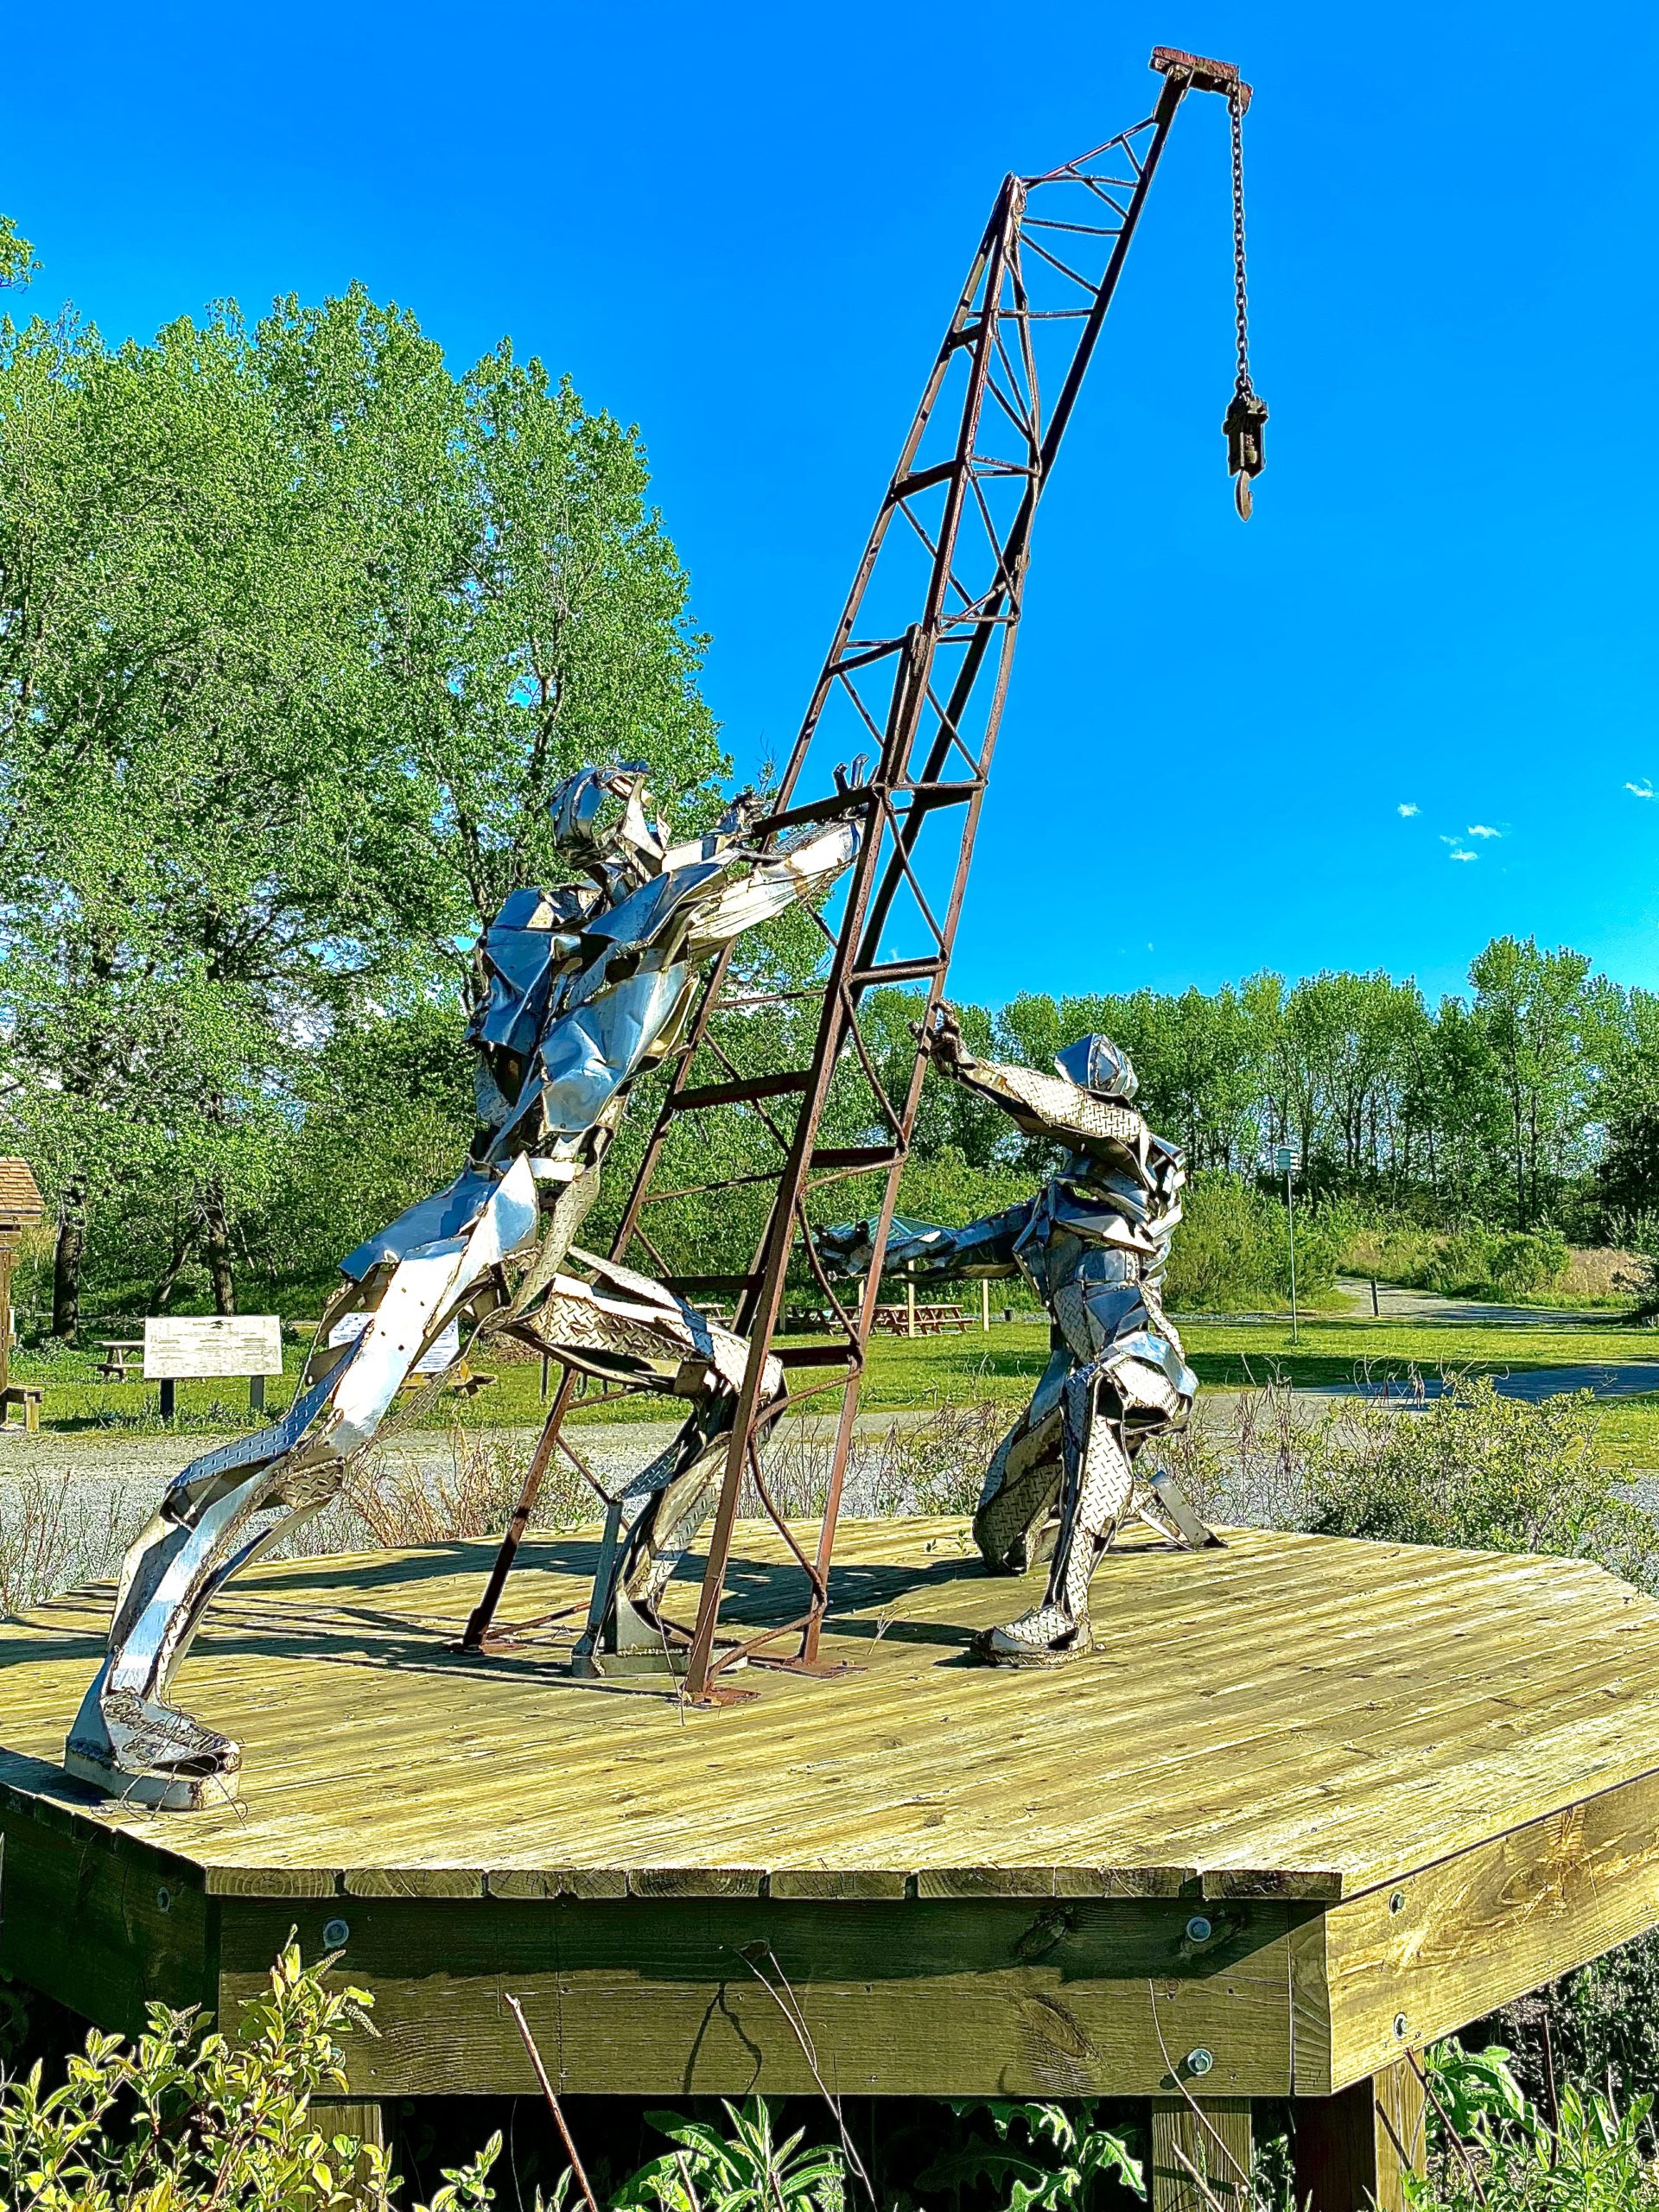 Scrap Metal sculpture at Paradise Creek Park in Portsmouth Virginia